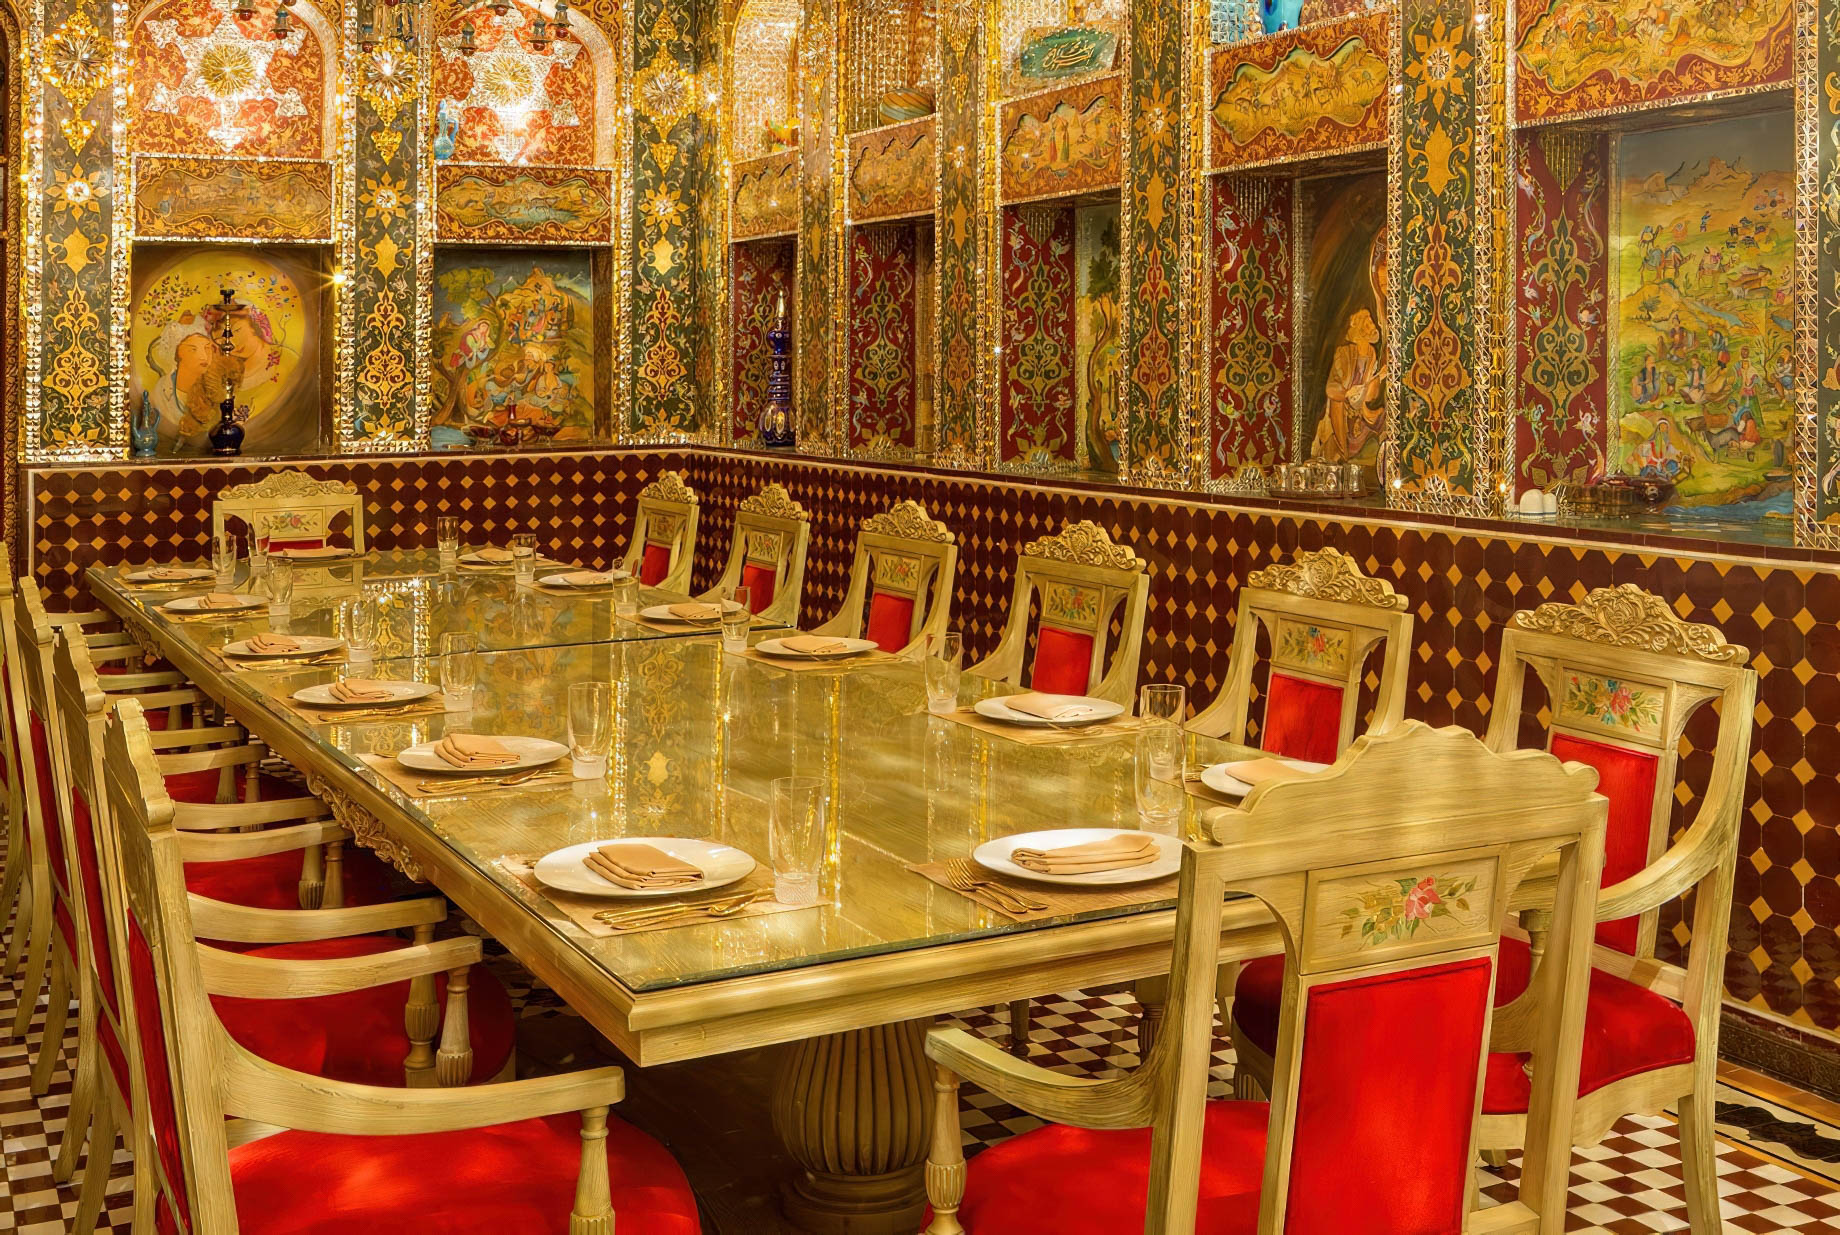 Sharq Village & Spa, A Ritz-Carlton Hotel – Doha, Qatar – At Parisa Souq Waqif Restaurant Dining Table